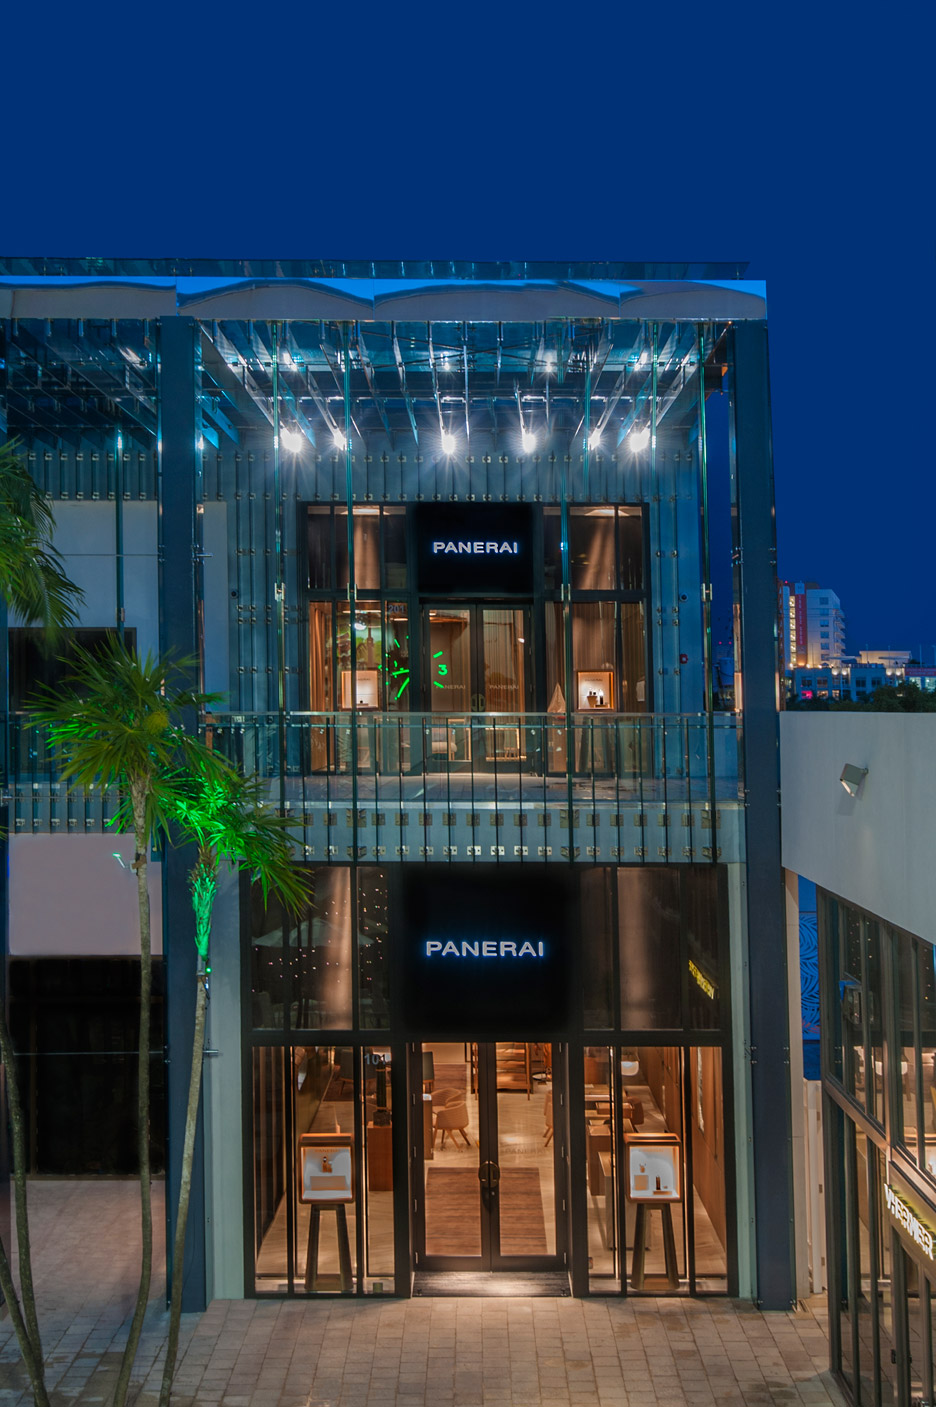 Patricia Urquiola's Miami store design for Panerai references watch mechanisms